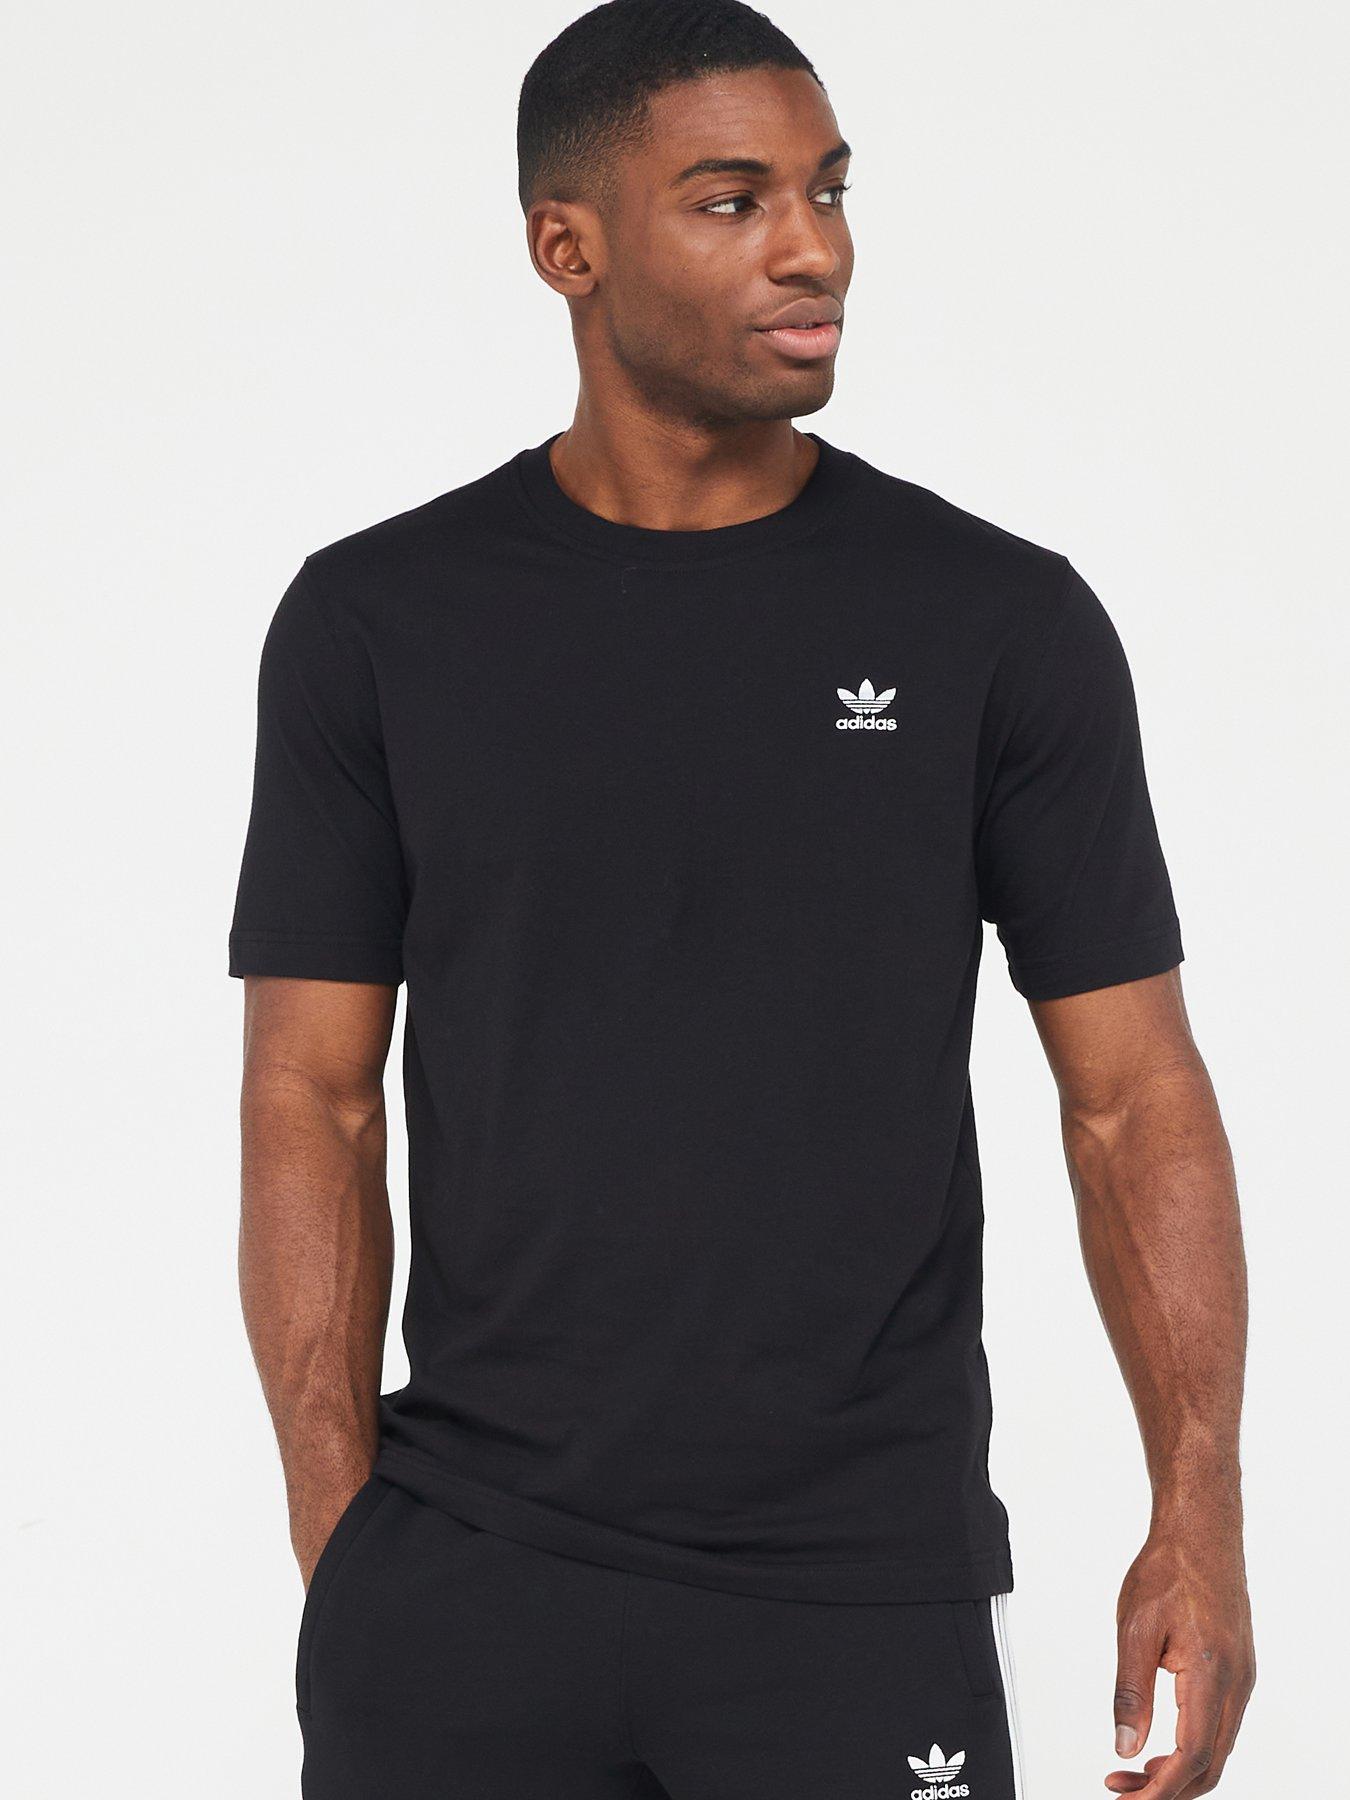 Adidas originals | T-shirts polos & | Men Sportswear 